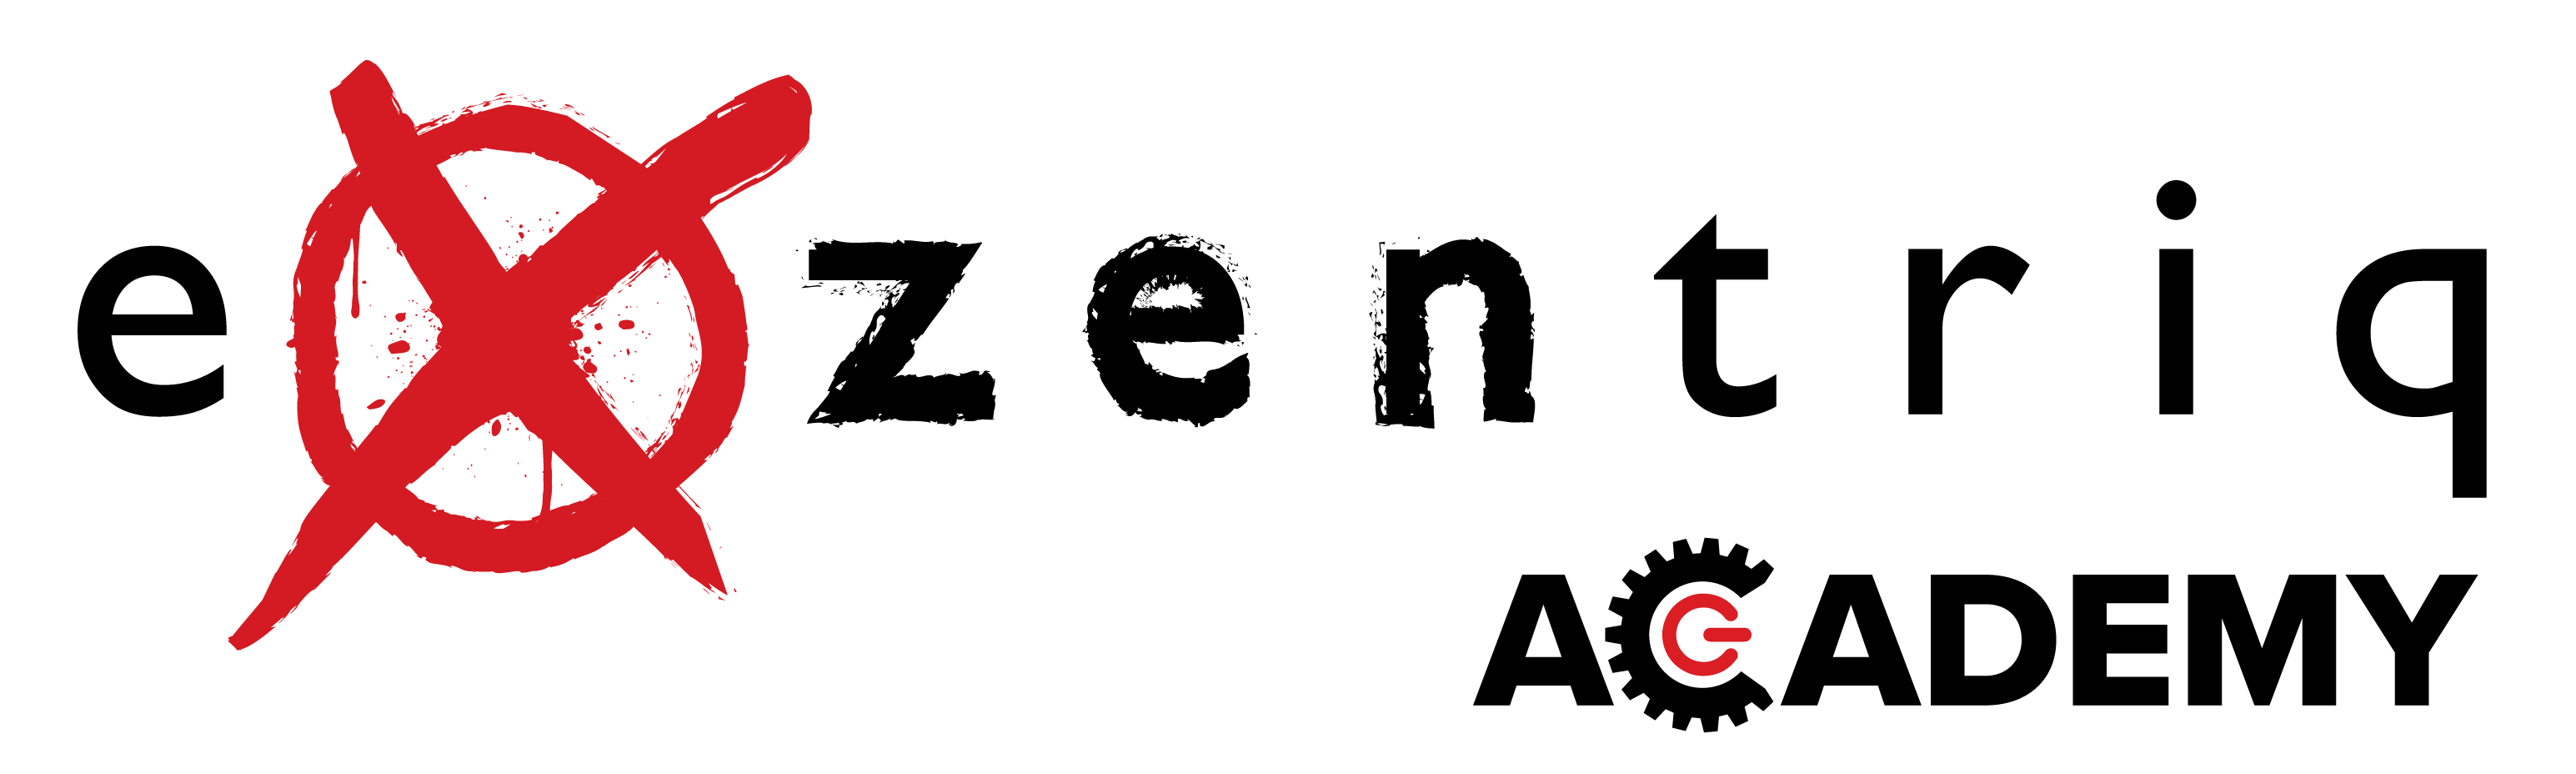 exzentriq academy logo